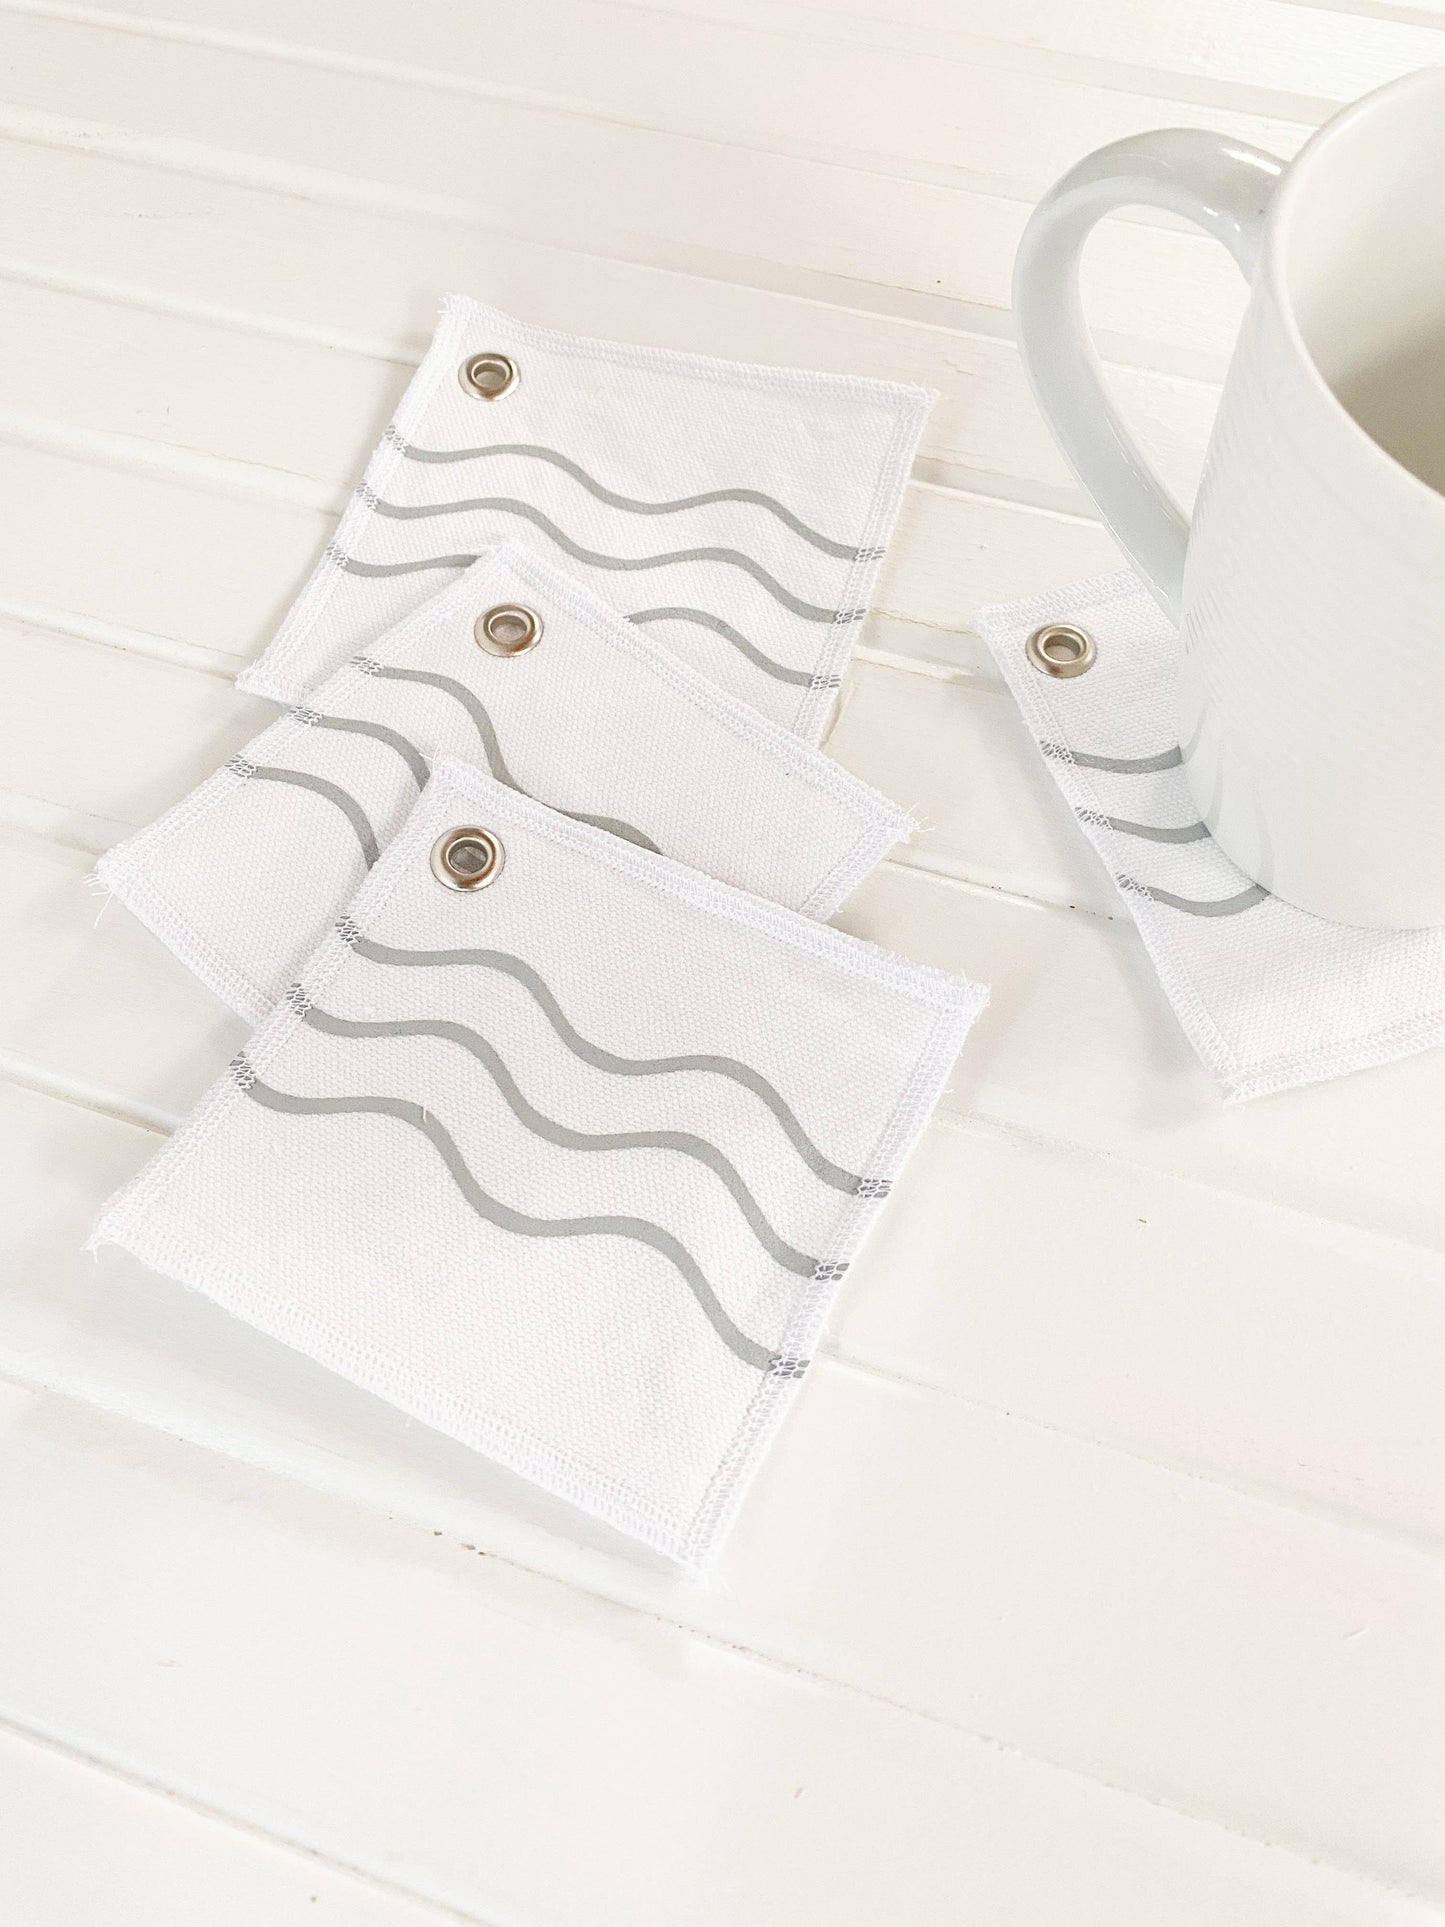 Table Rock Lake Canvas Coasters Set - Wave Design